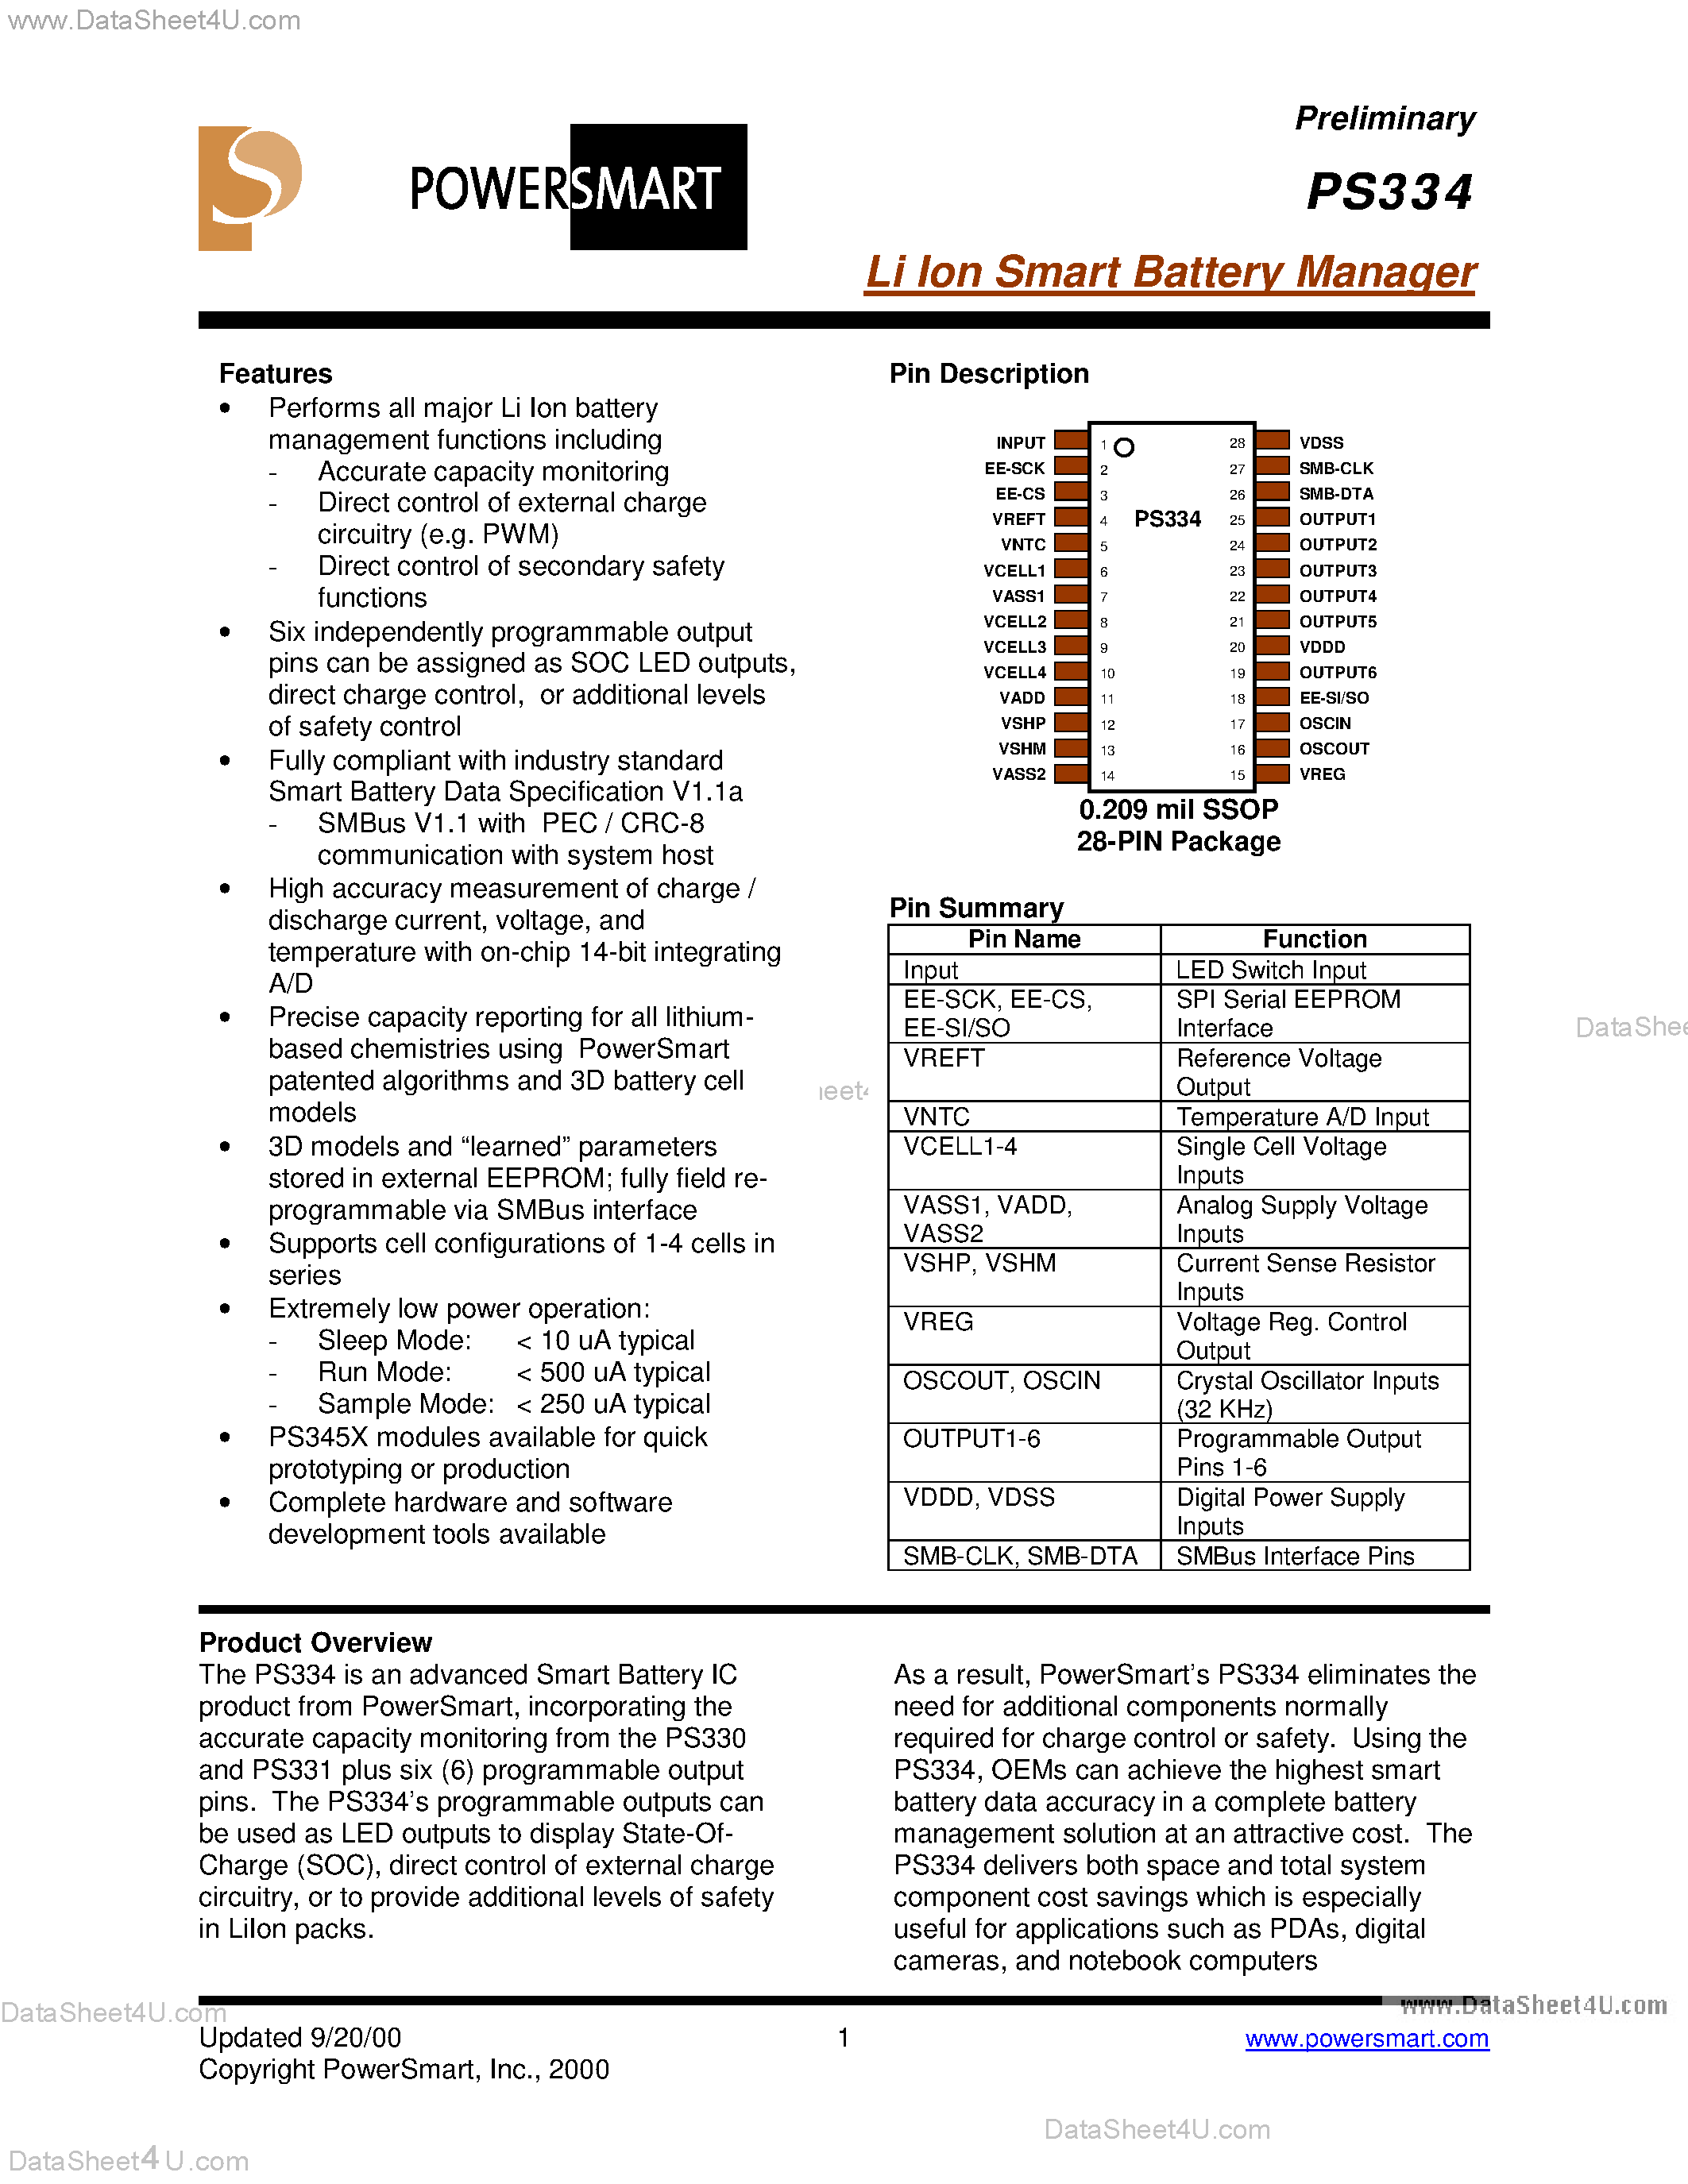 Даташит PS334 - Programmable Smbus Smart Battery ic страница 1